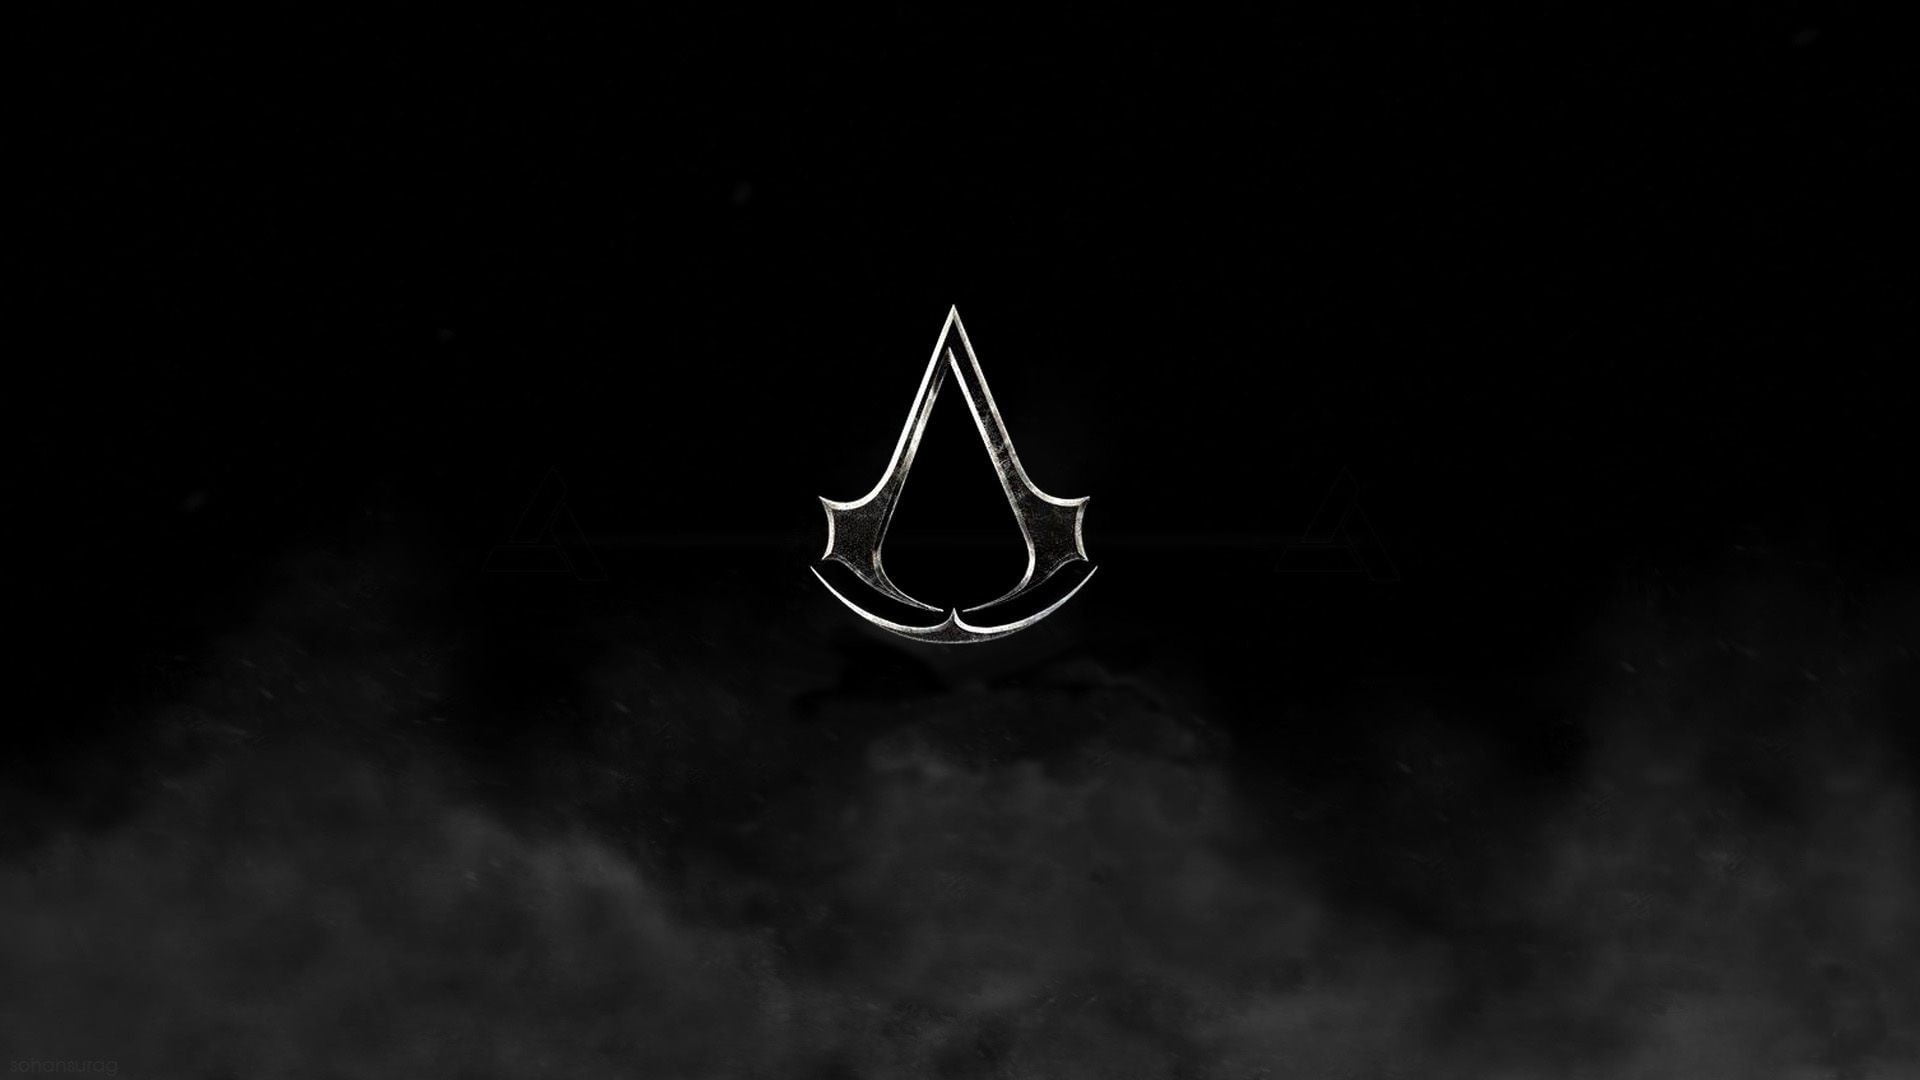 Assassin's Creed emblem, backgrounds, royalty, black Color, luxury